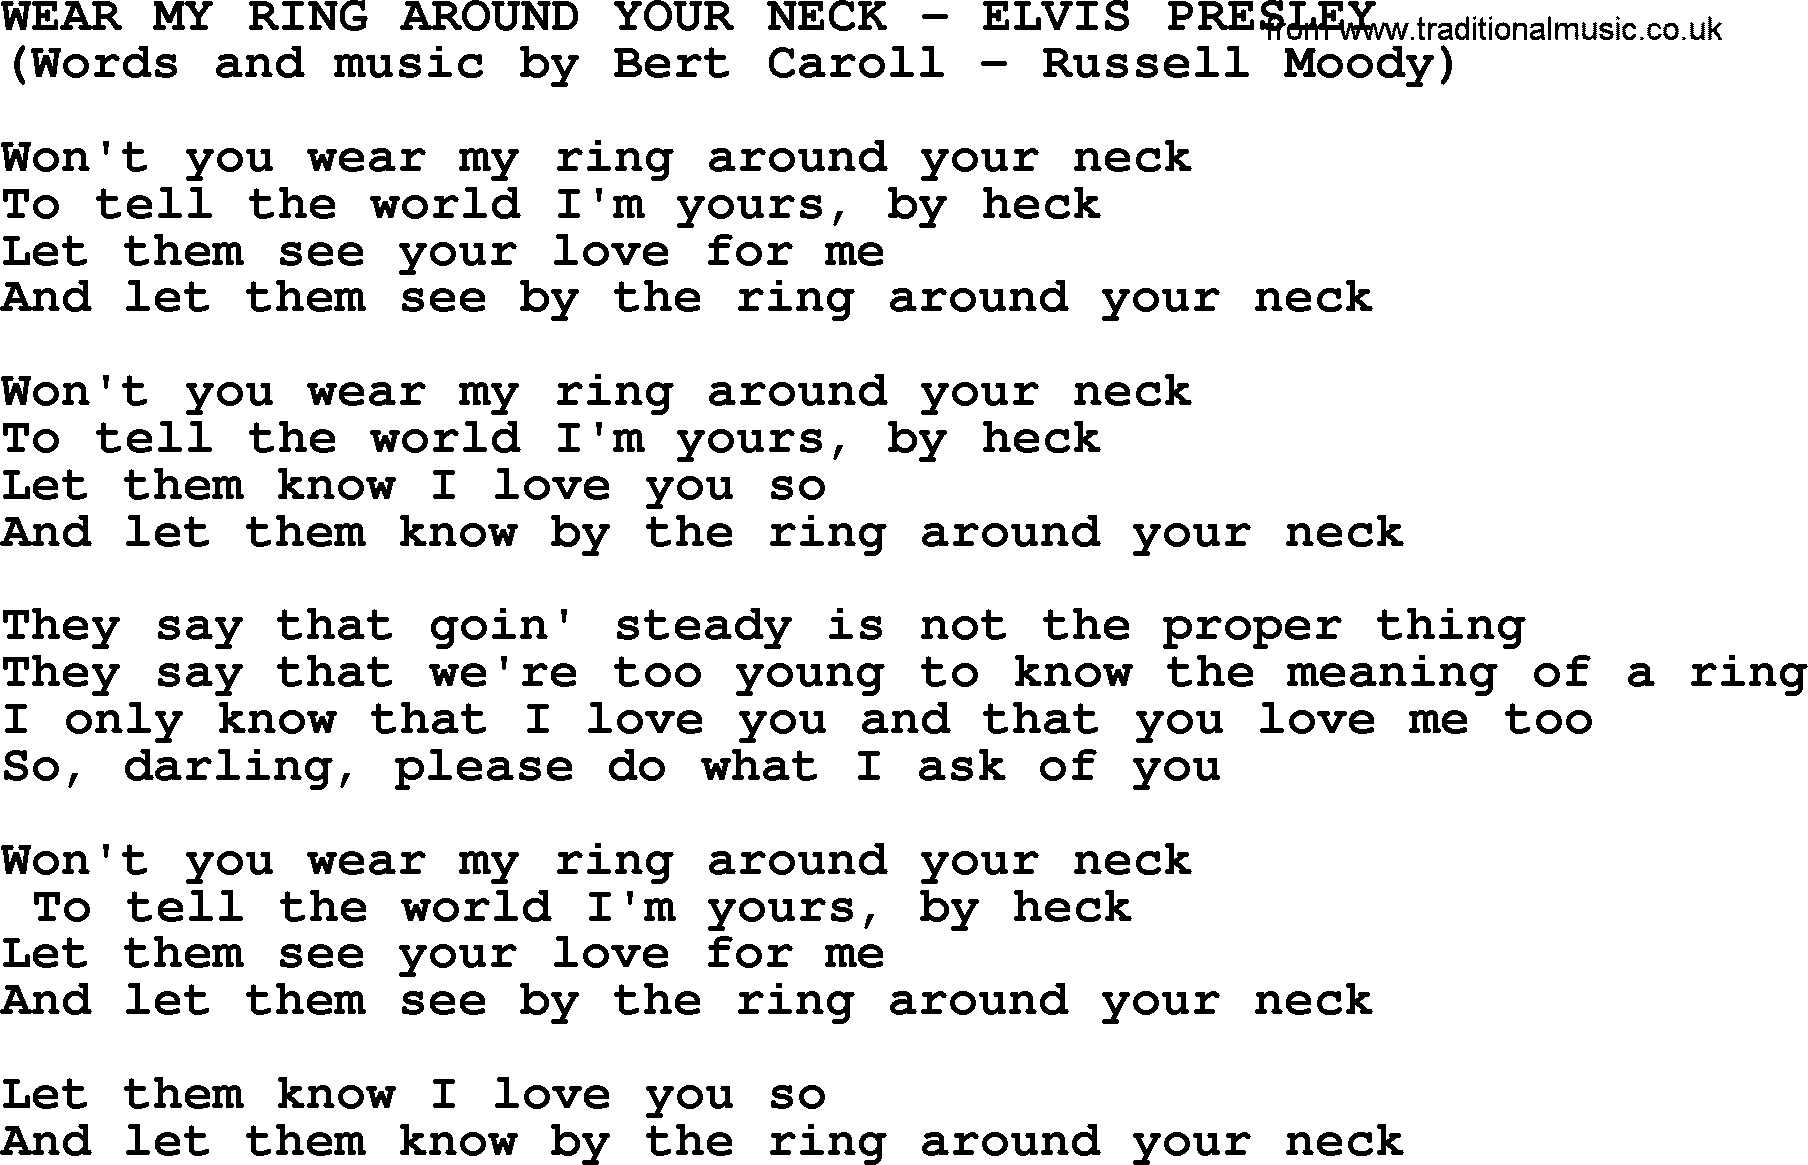 Elvis Presley song: Wear My Ring Around Your Neck lyrics